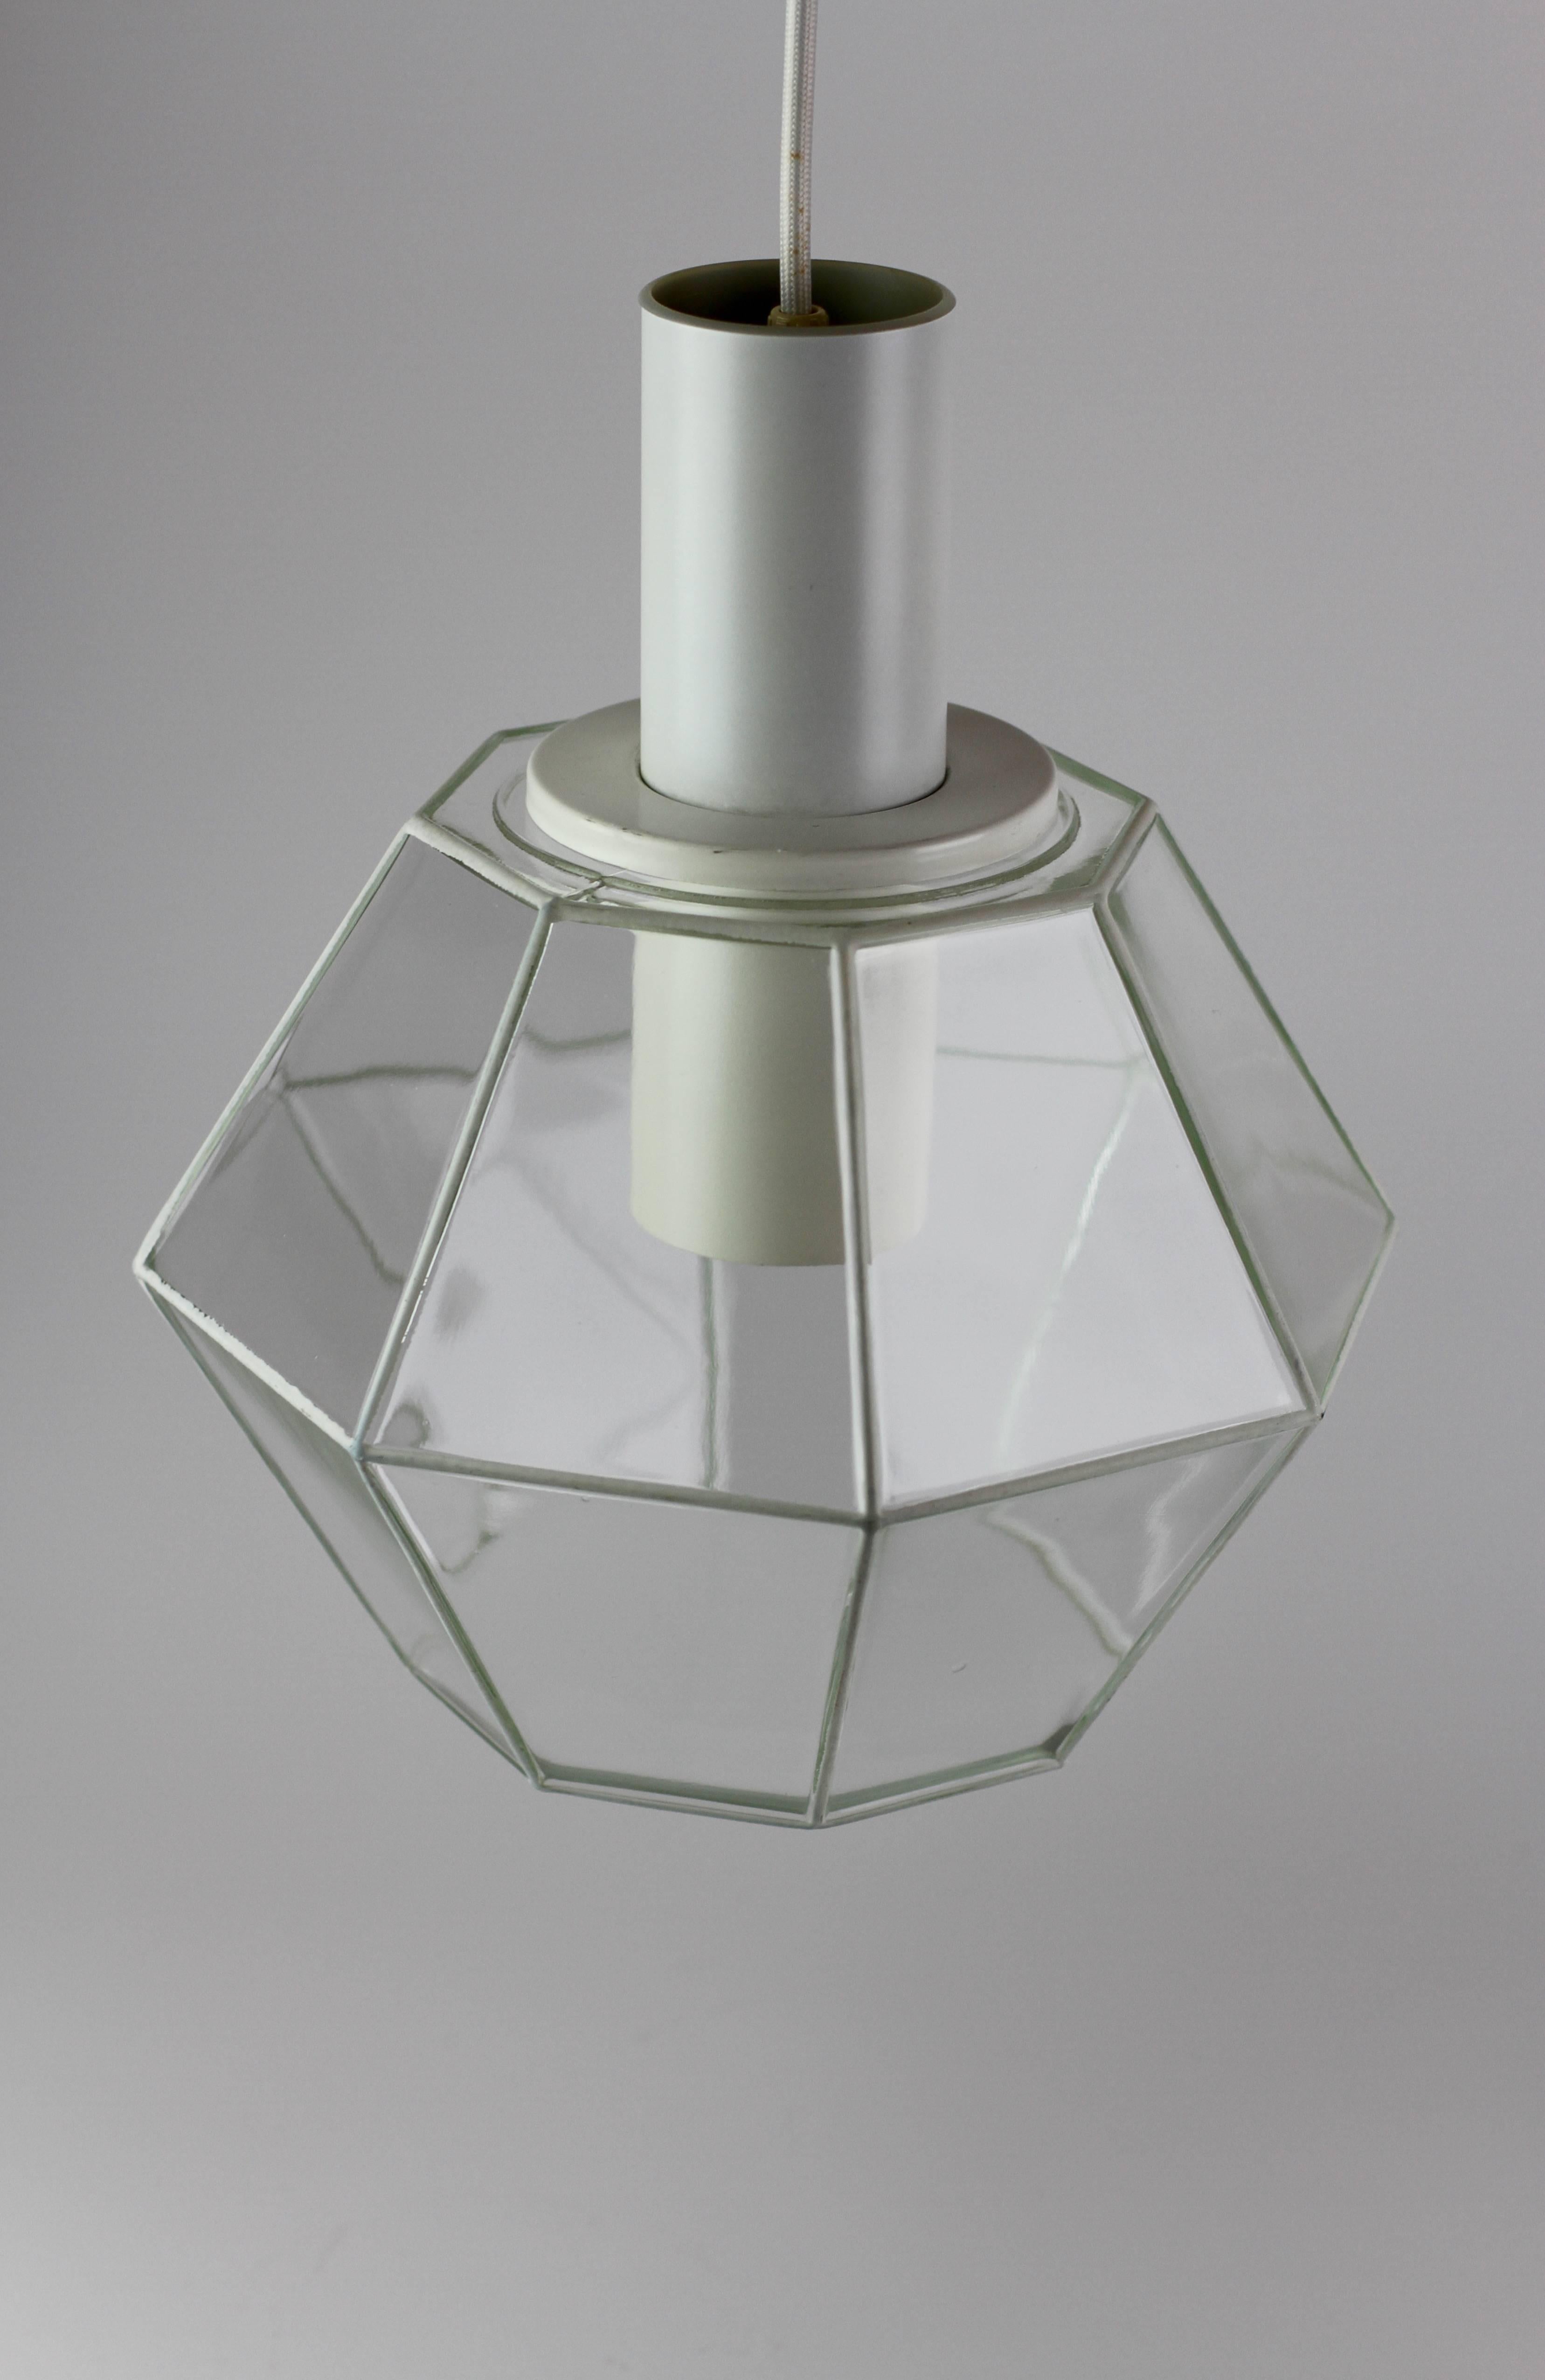 Glashütte Limburg Geometric Pendant Lights / Lamps White & Clear Glass 1970s (Geformt)